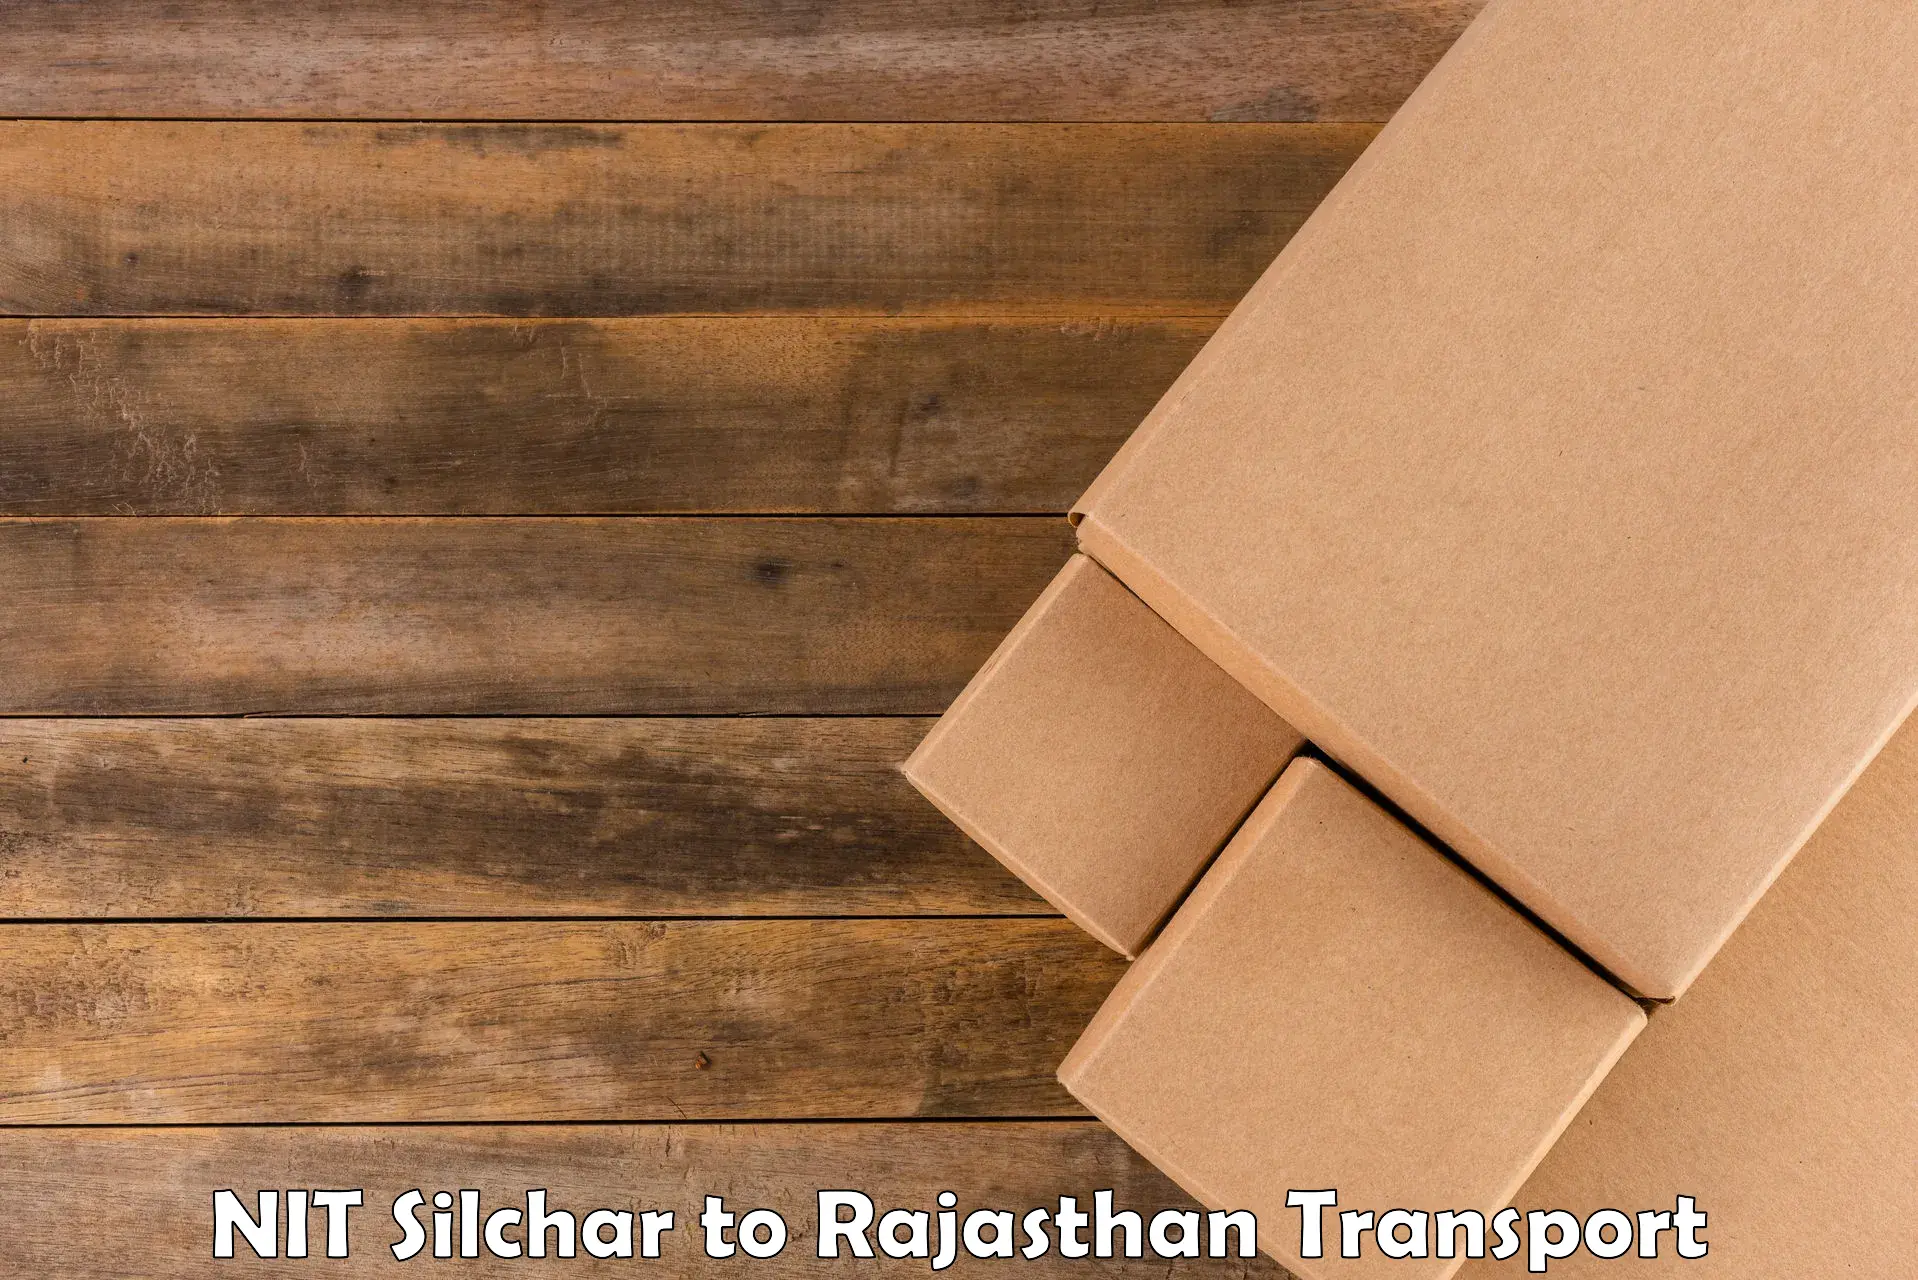 Shipping partner NIT Silchar to Malpura